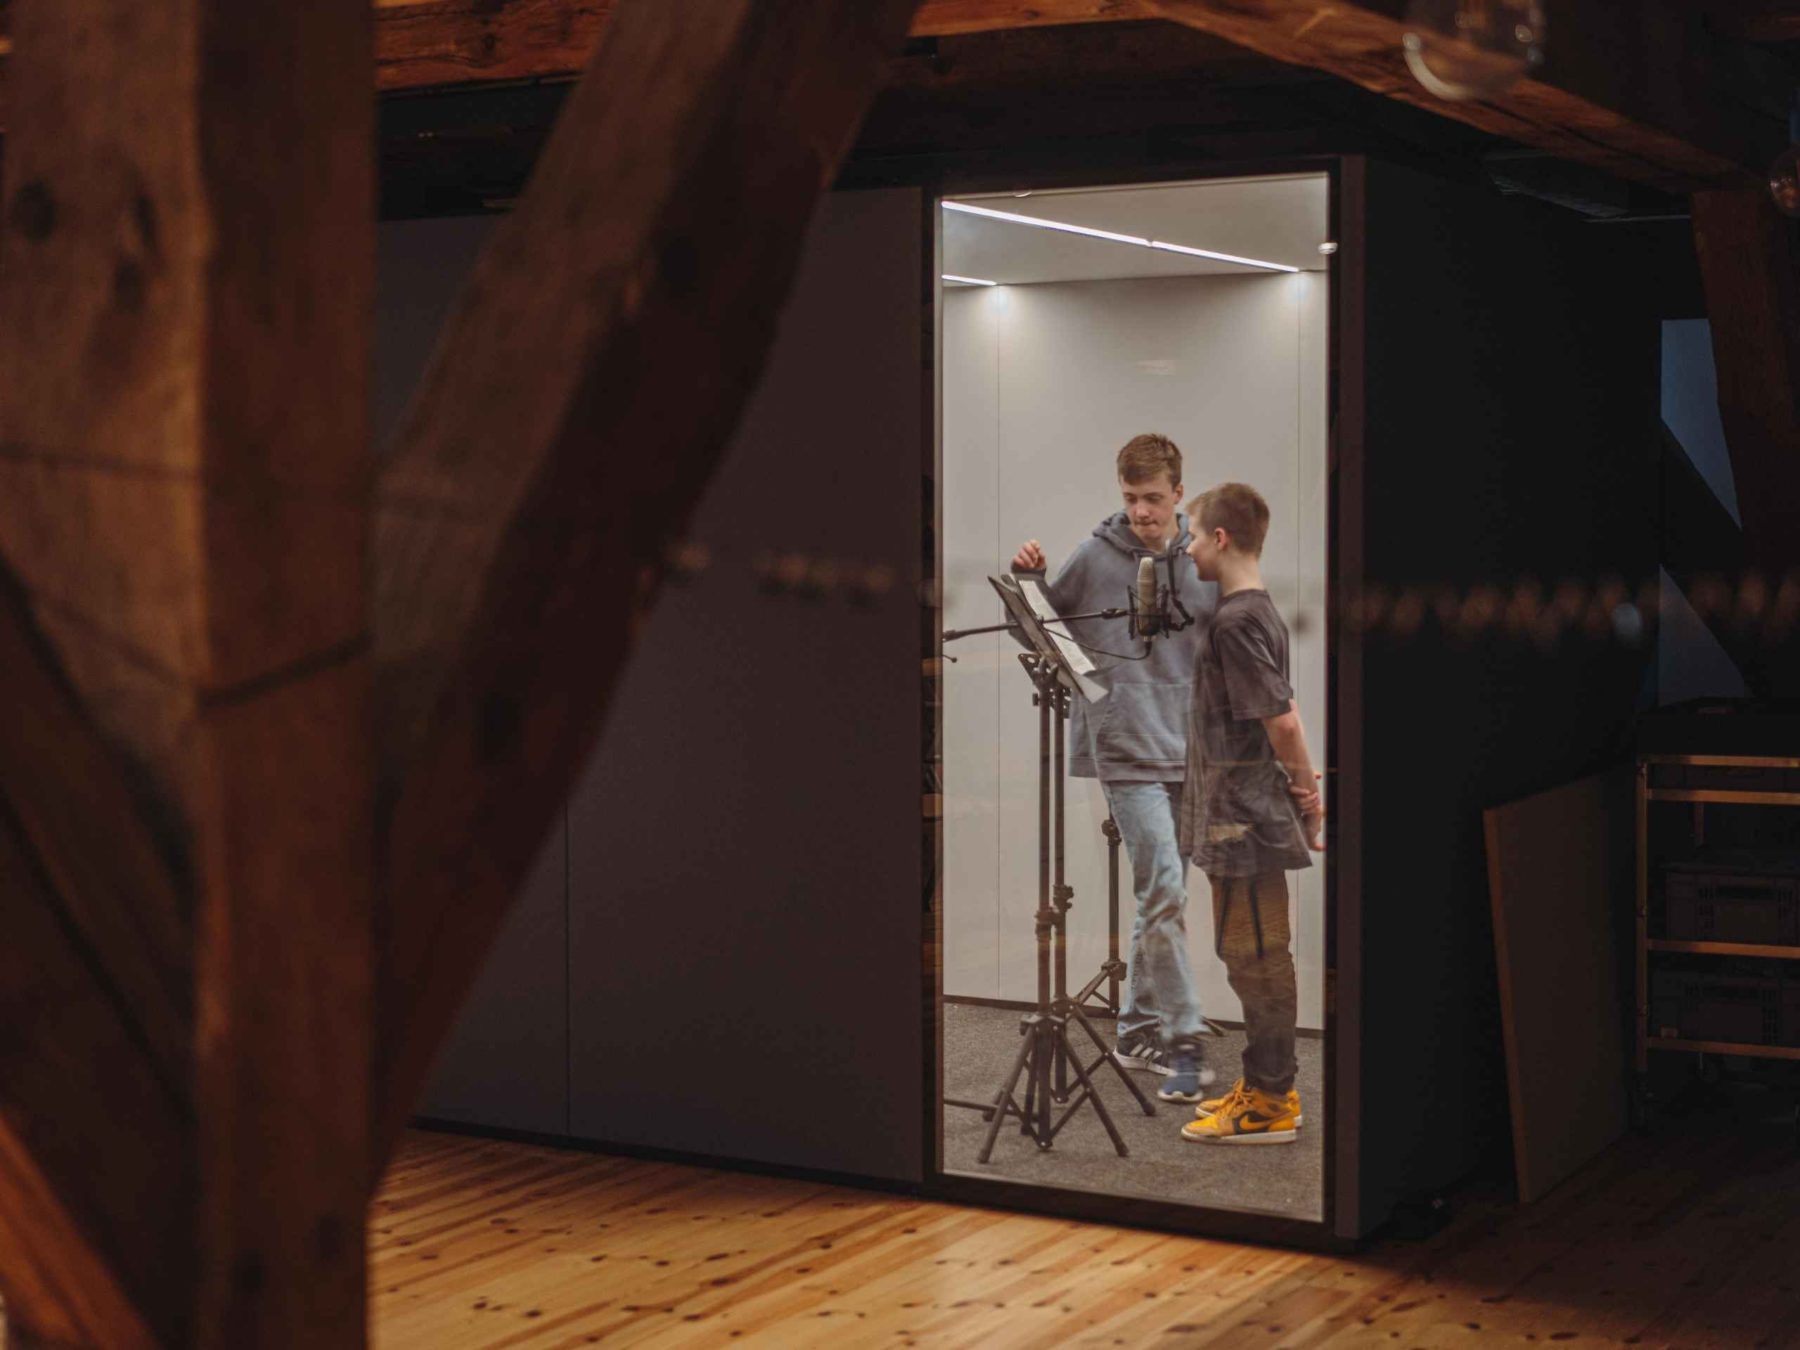 Soundaufnahme im Studio, zwei Jugendliche am Mikrofon